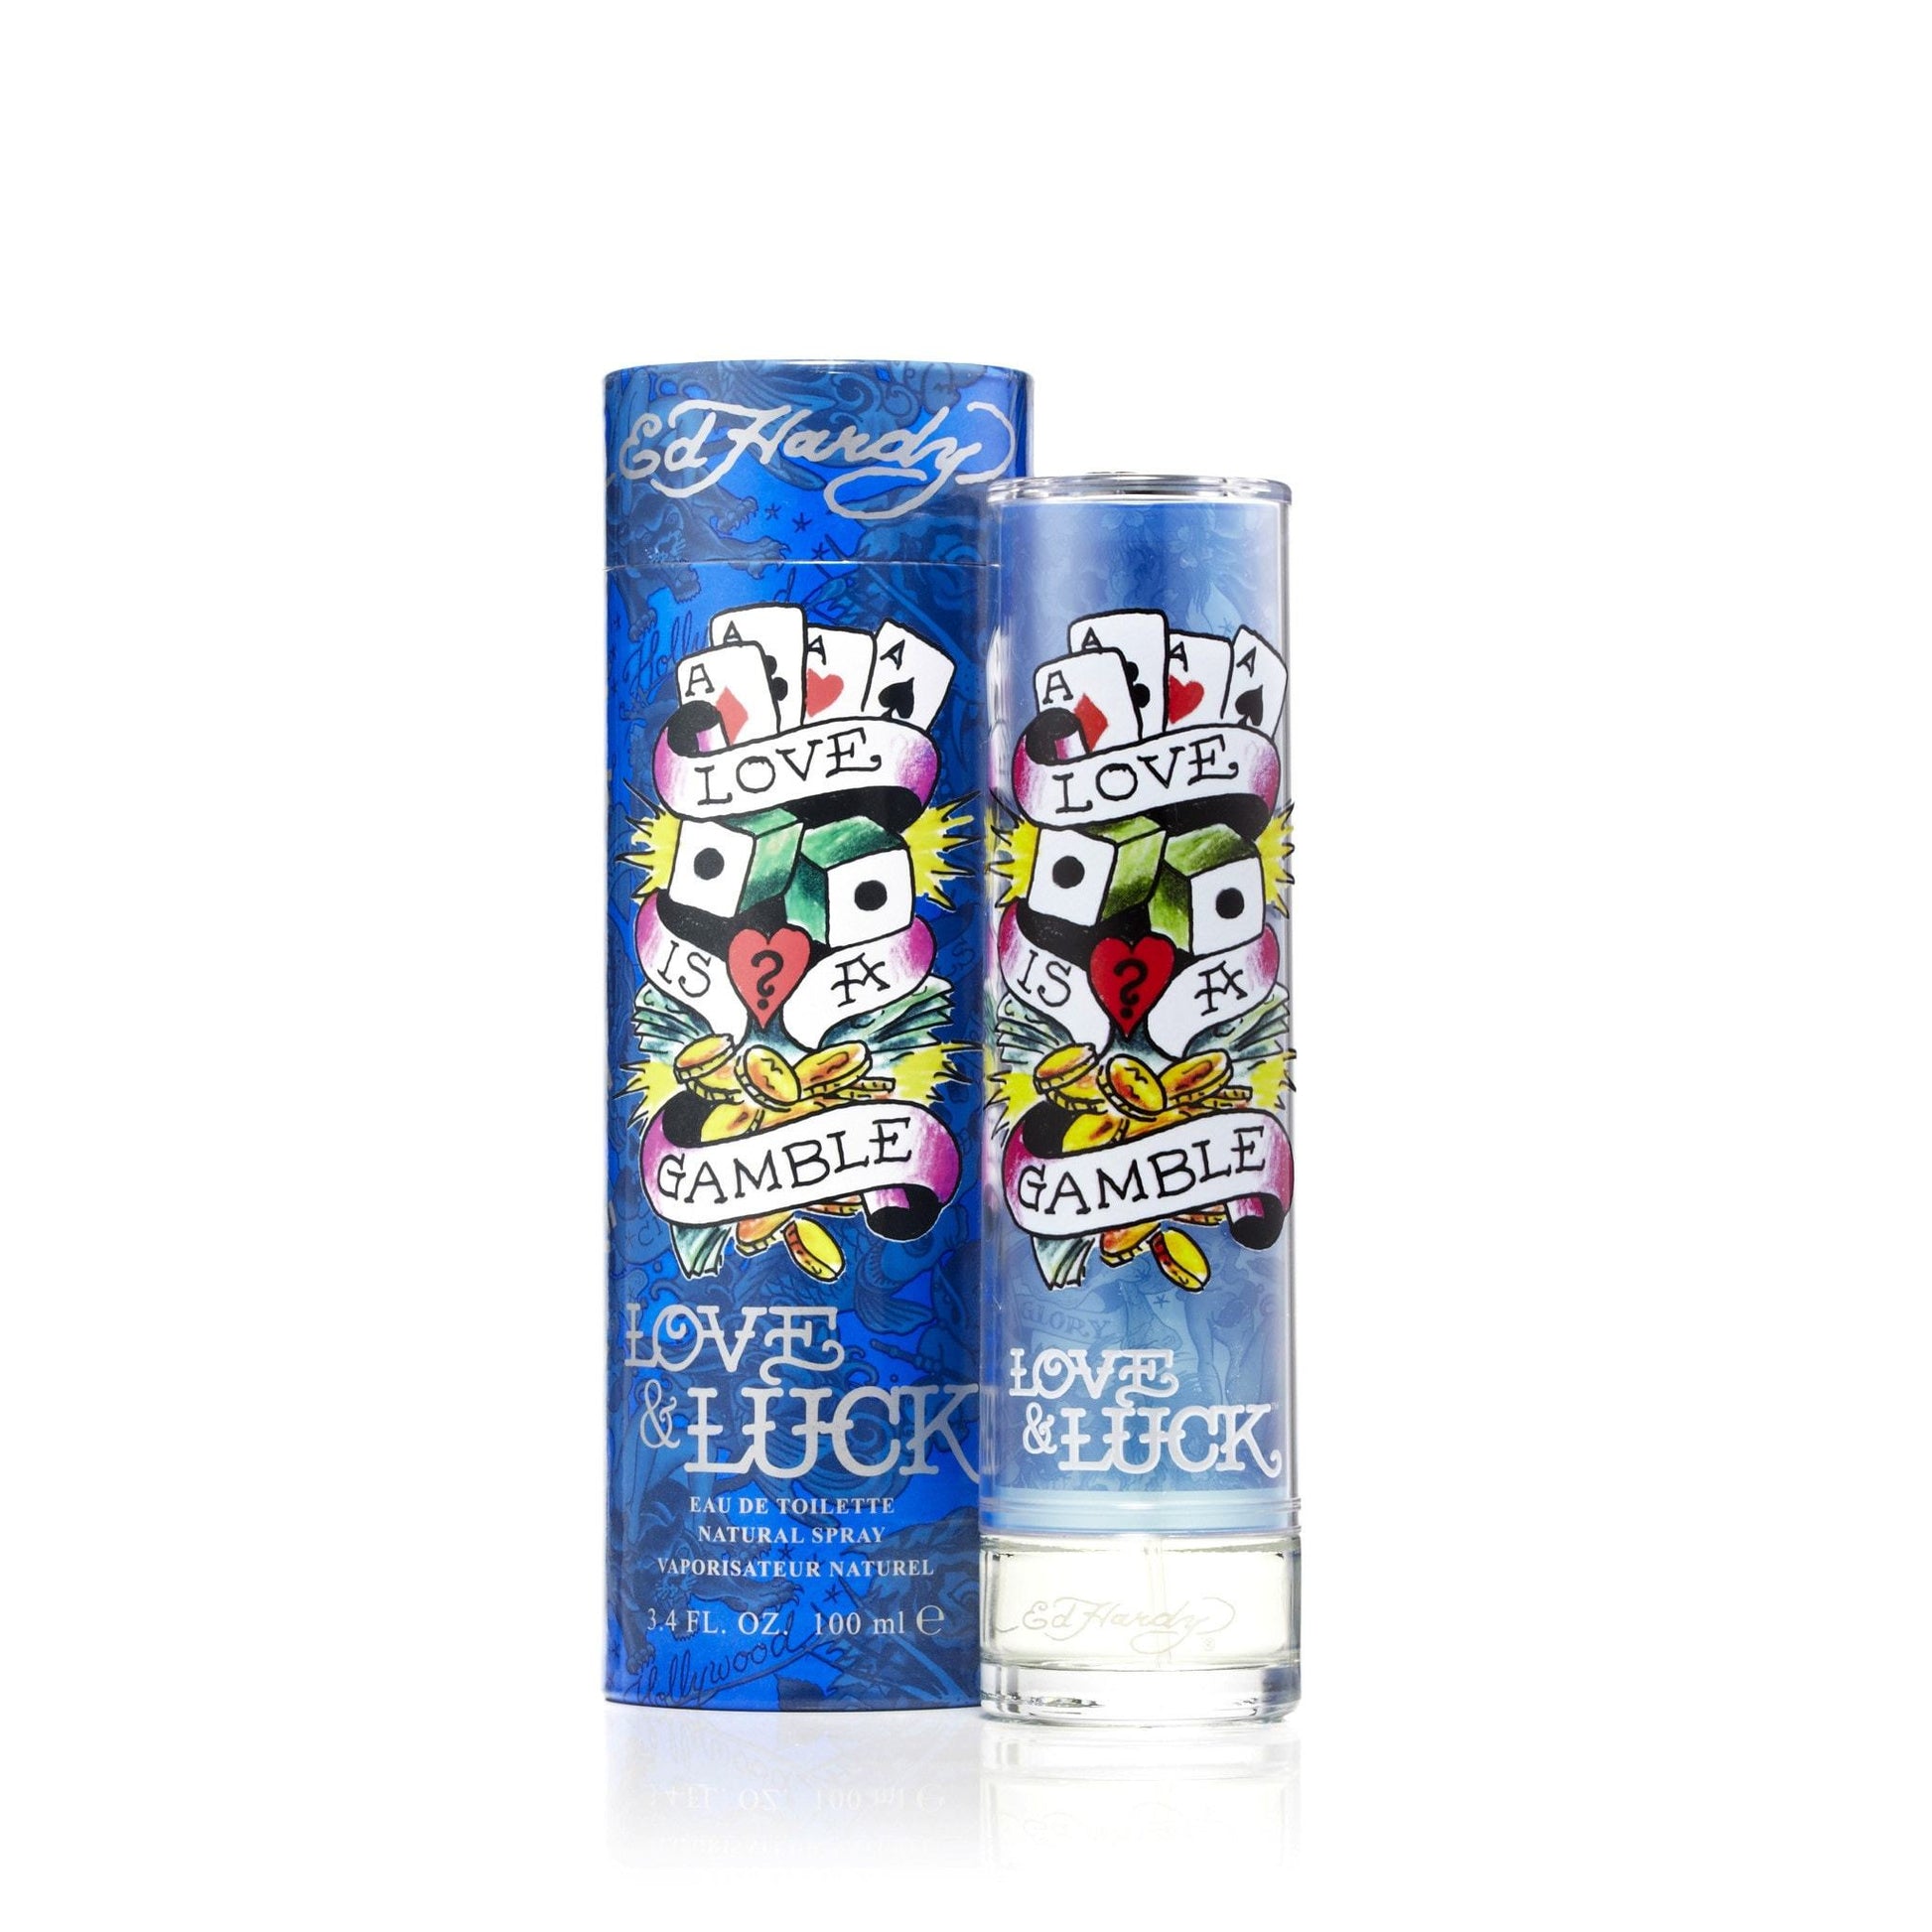 Ed Hardy Love & Luck Eau de Toilette Spray for Men by Christian Audigier, Product image 3